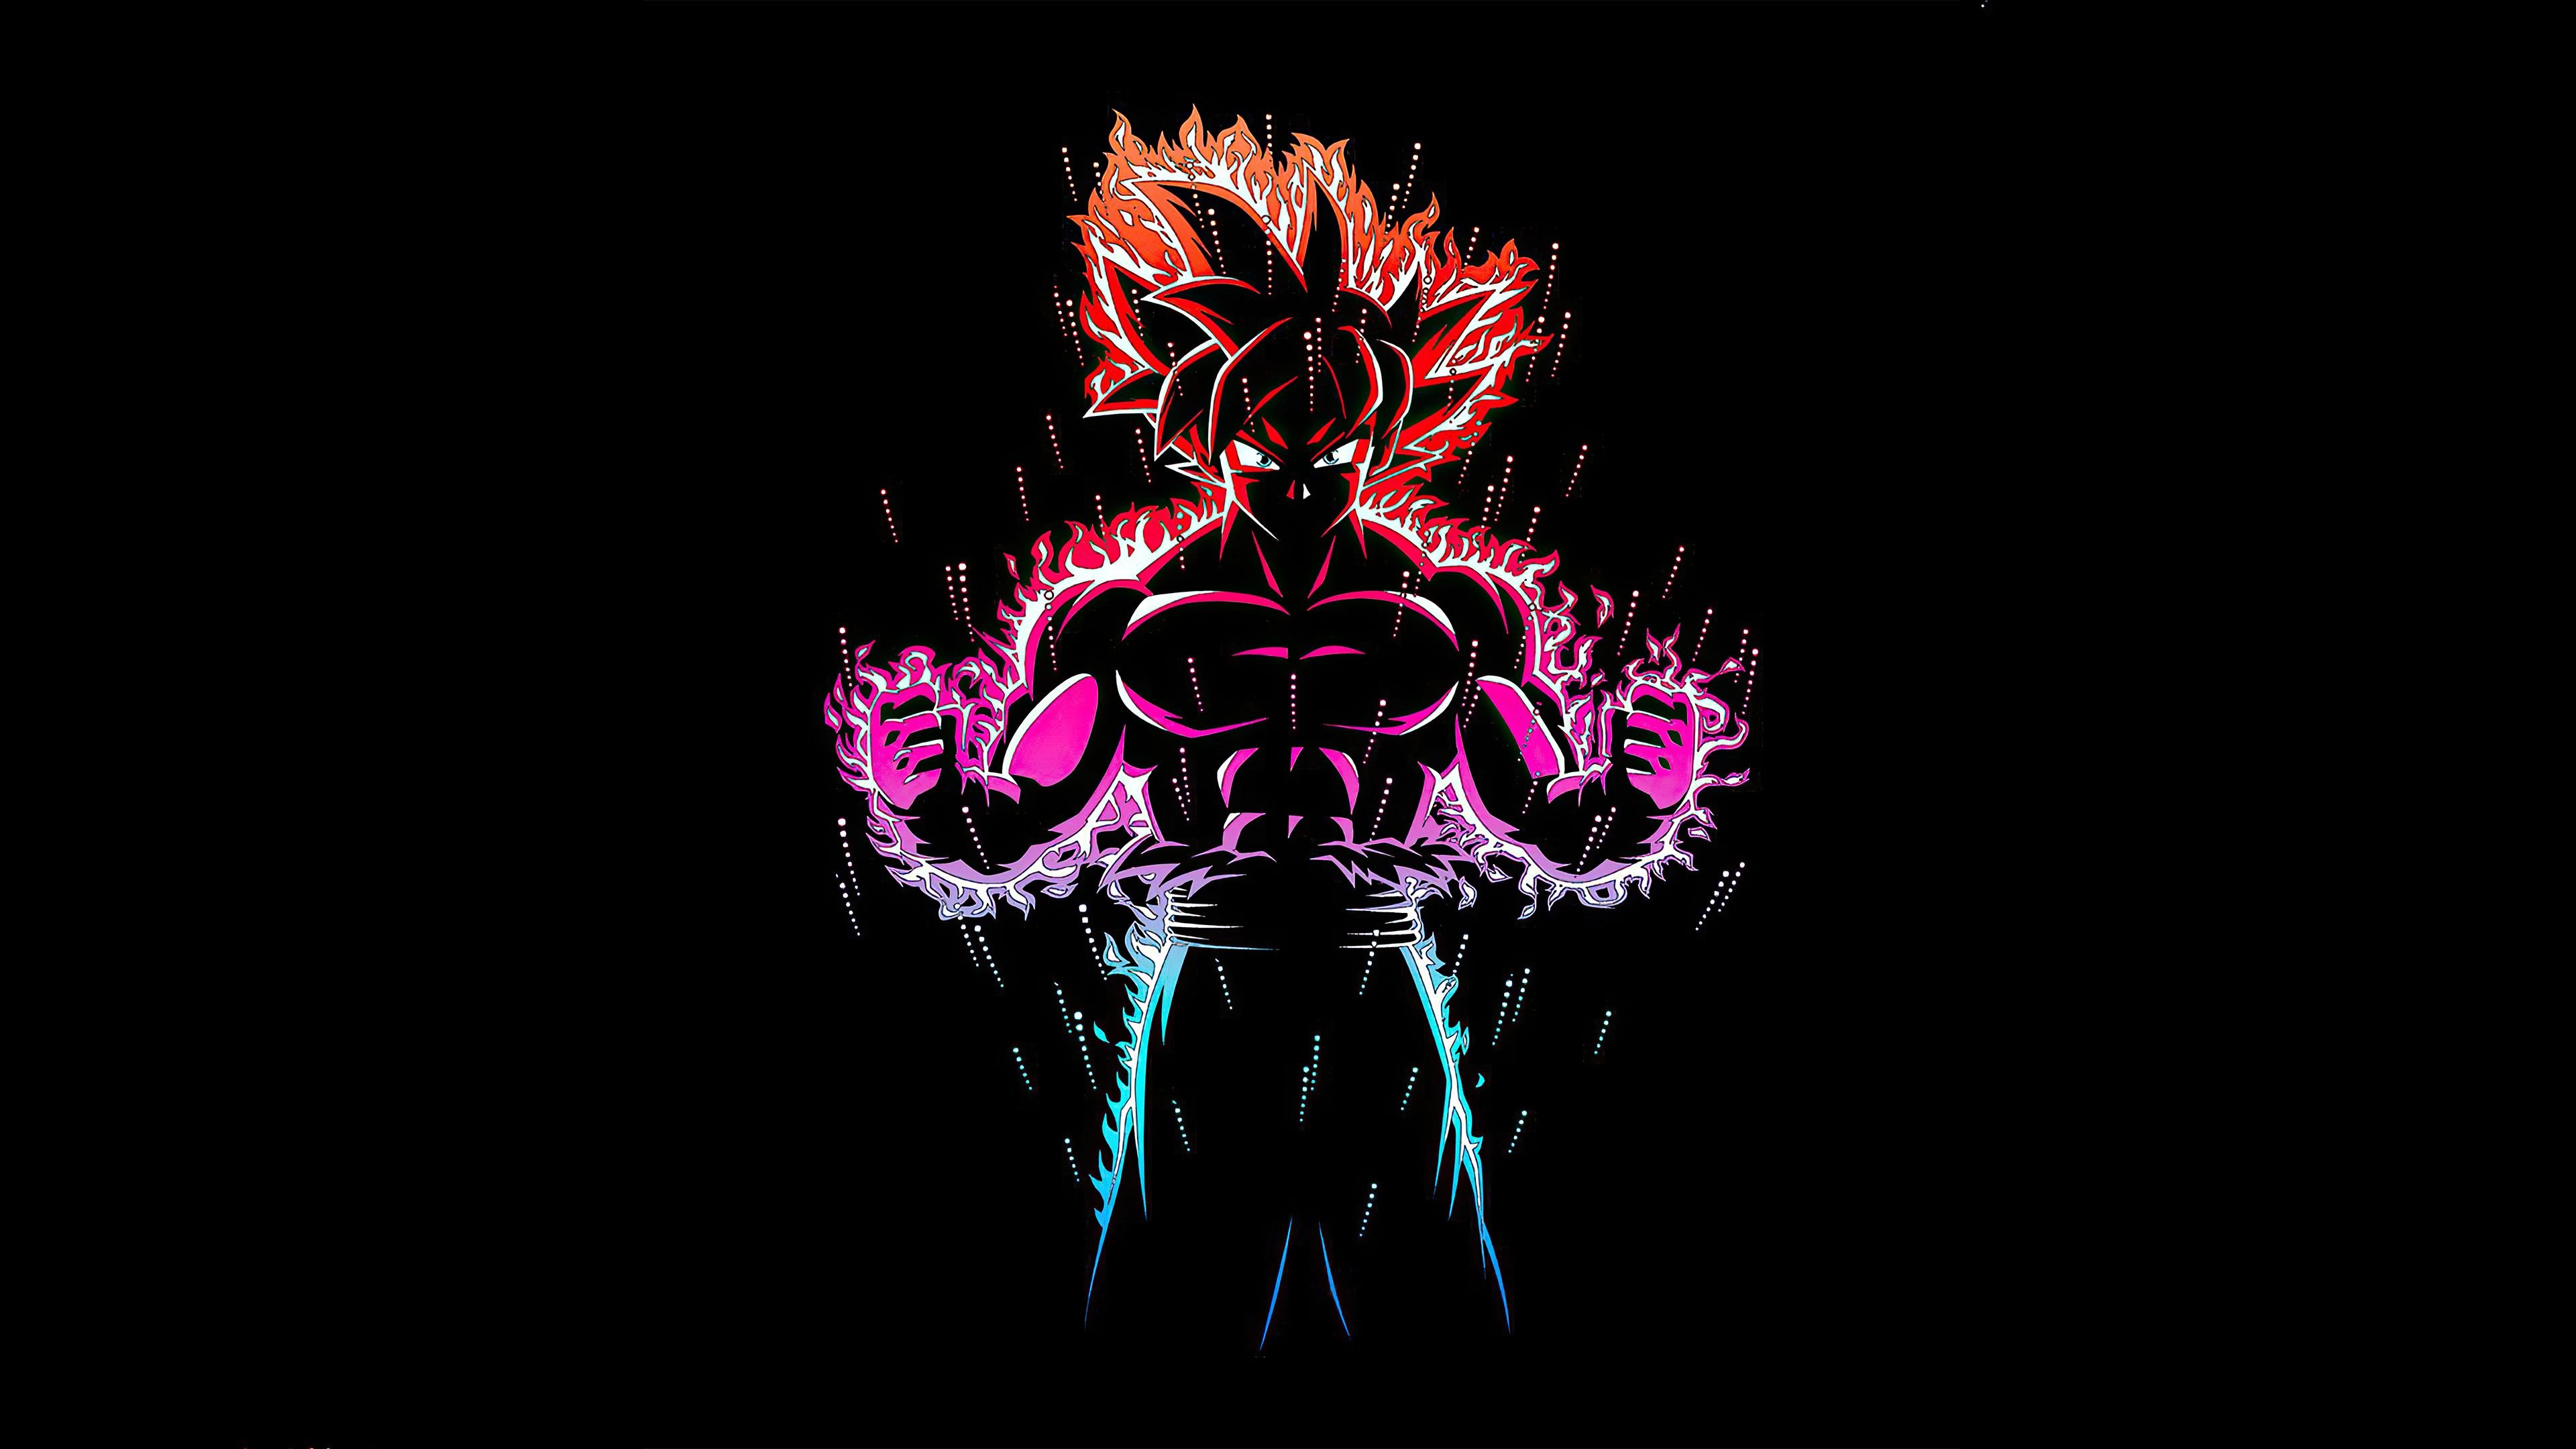 Dragon Ball Z Goku Ultra Instinct Fire 4k, HD Anime, 4k Wallpaper, Image, Background, Photo and Picture